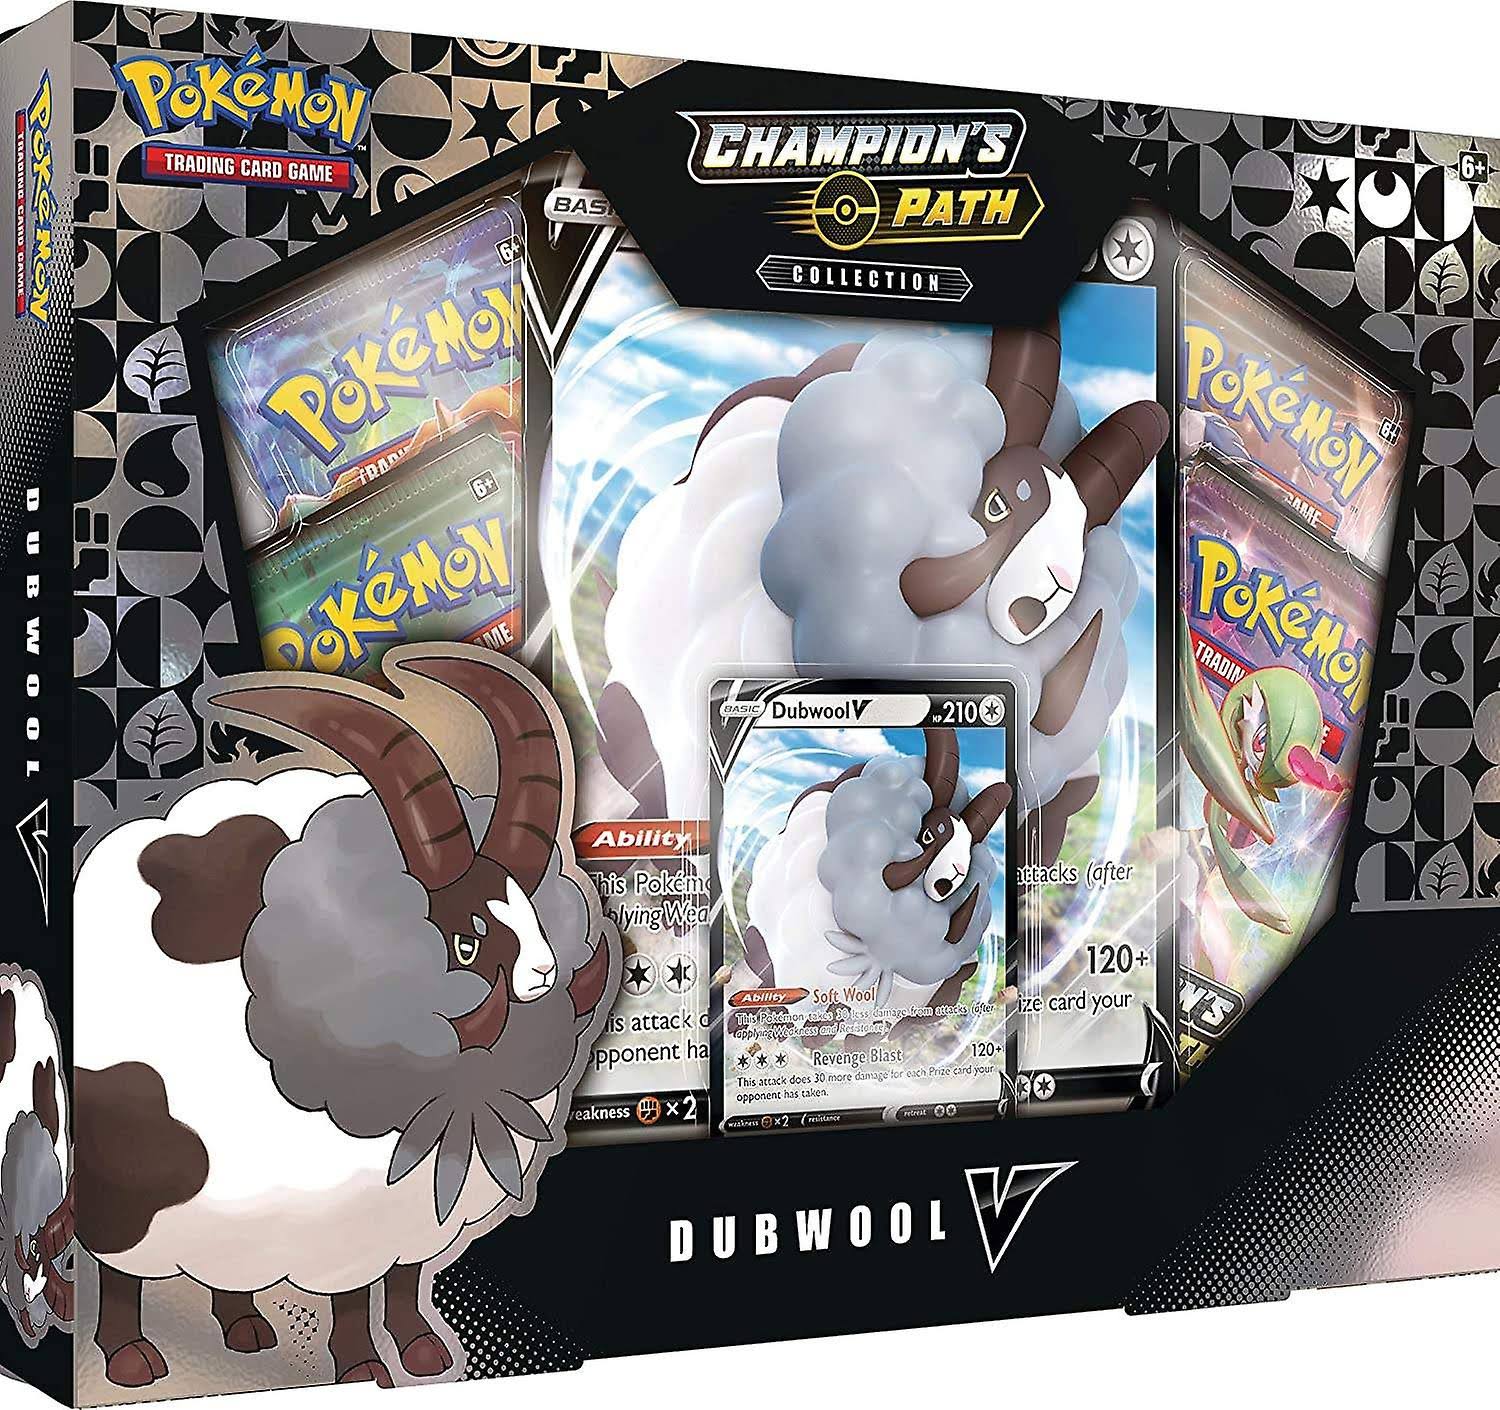 Pokemon TCG: Champion's Path Collection Dubwool V Box